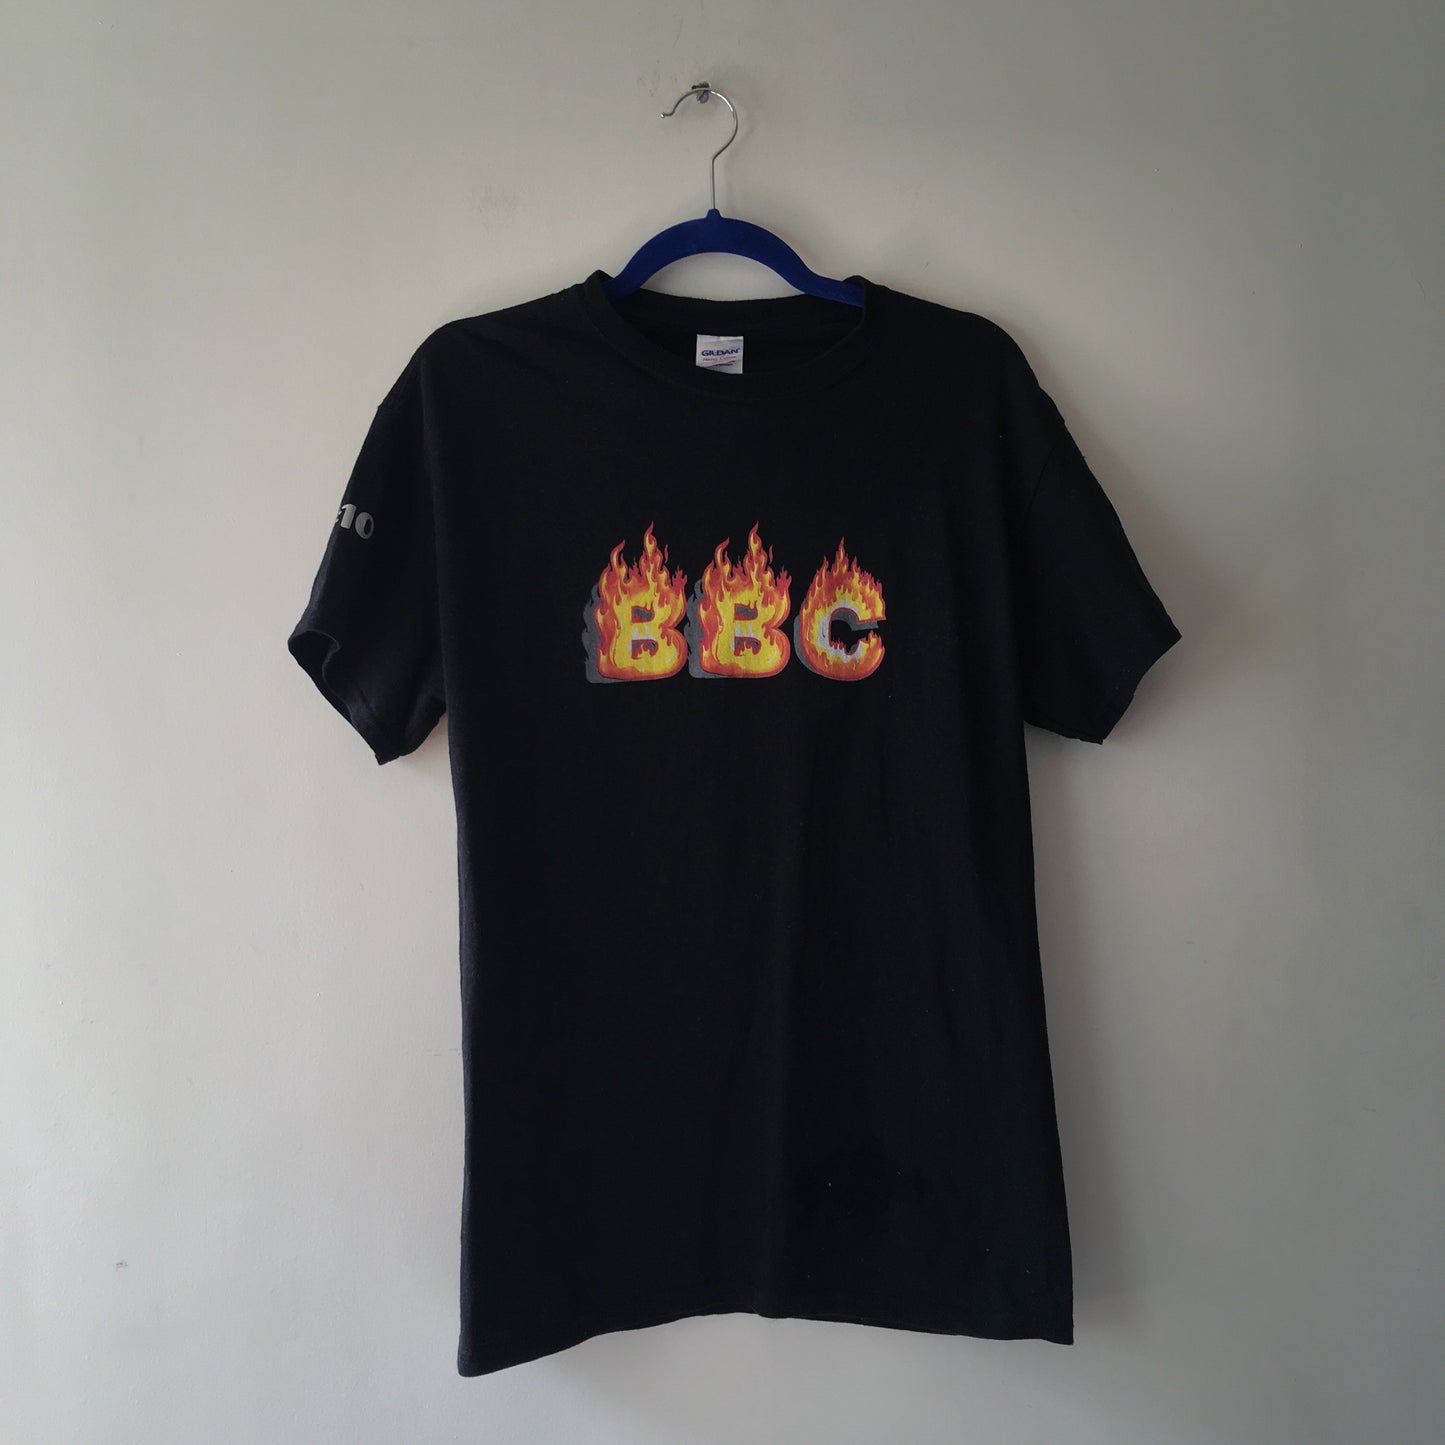 BBC T-shirt